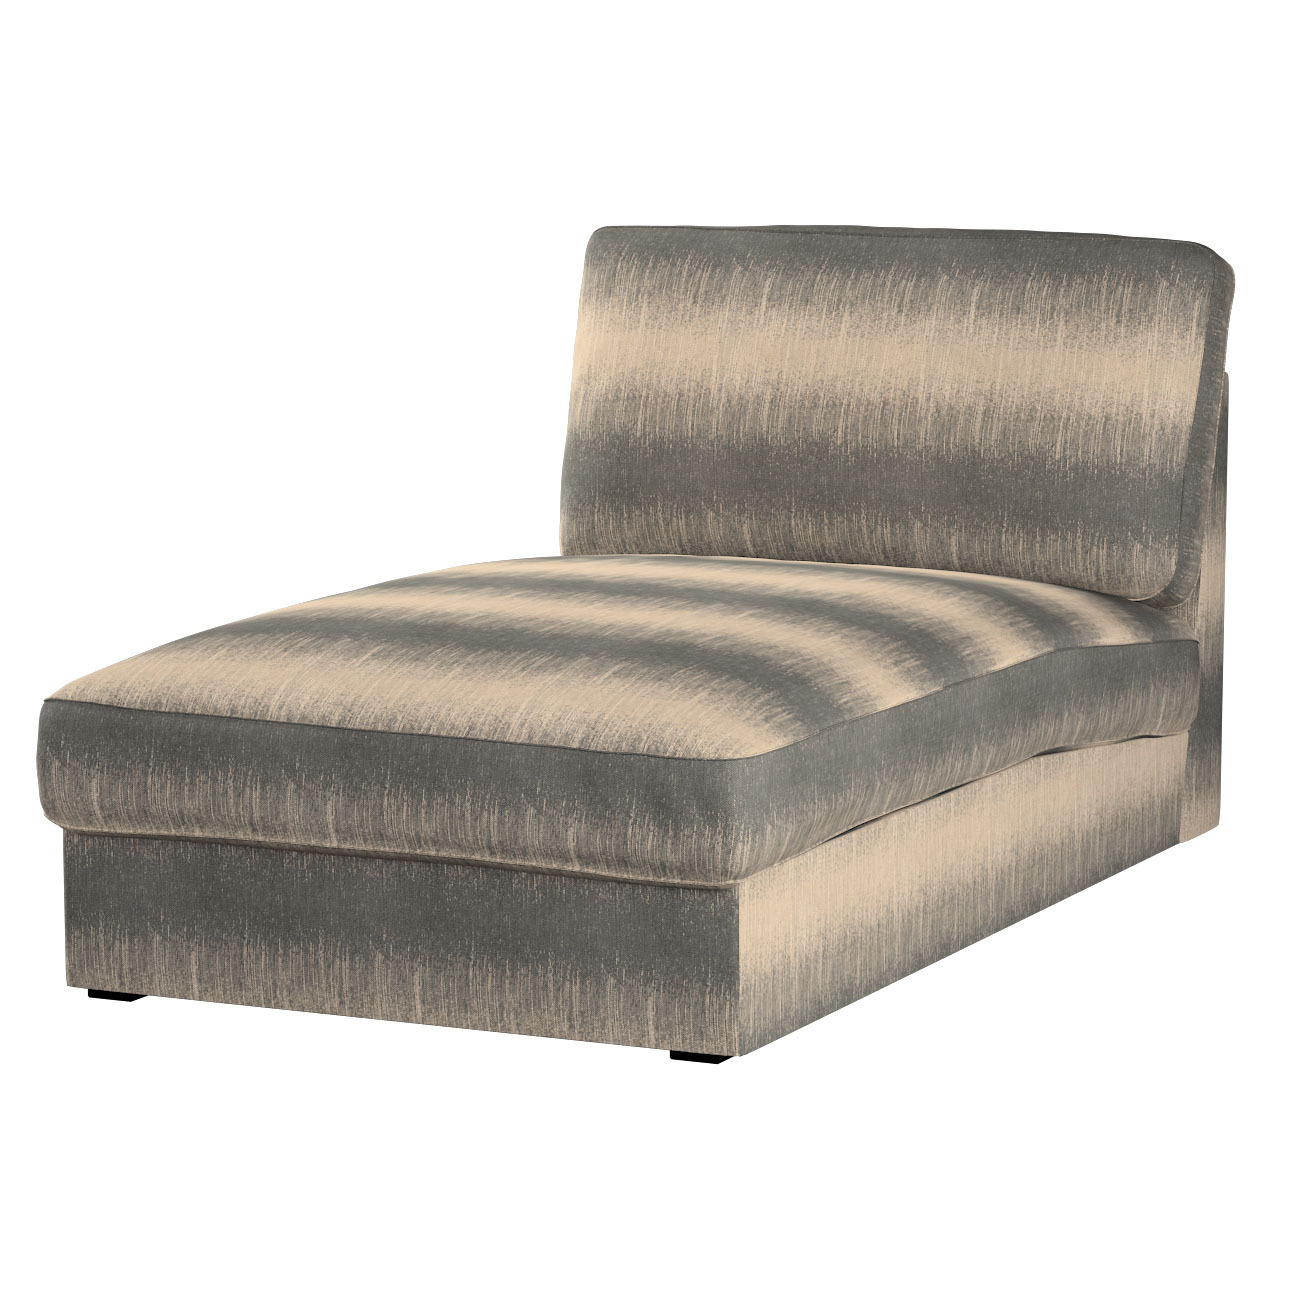 Bezug für Kivik Recamiere Sofa, grau-beige, Bezug für Kivik Recamiere, Livi günstig online kaufen